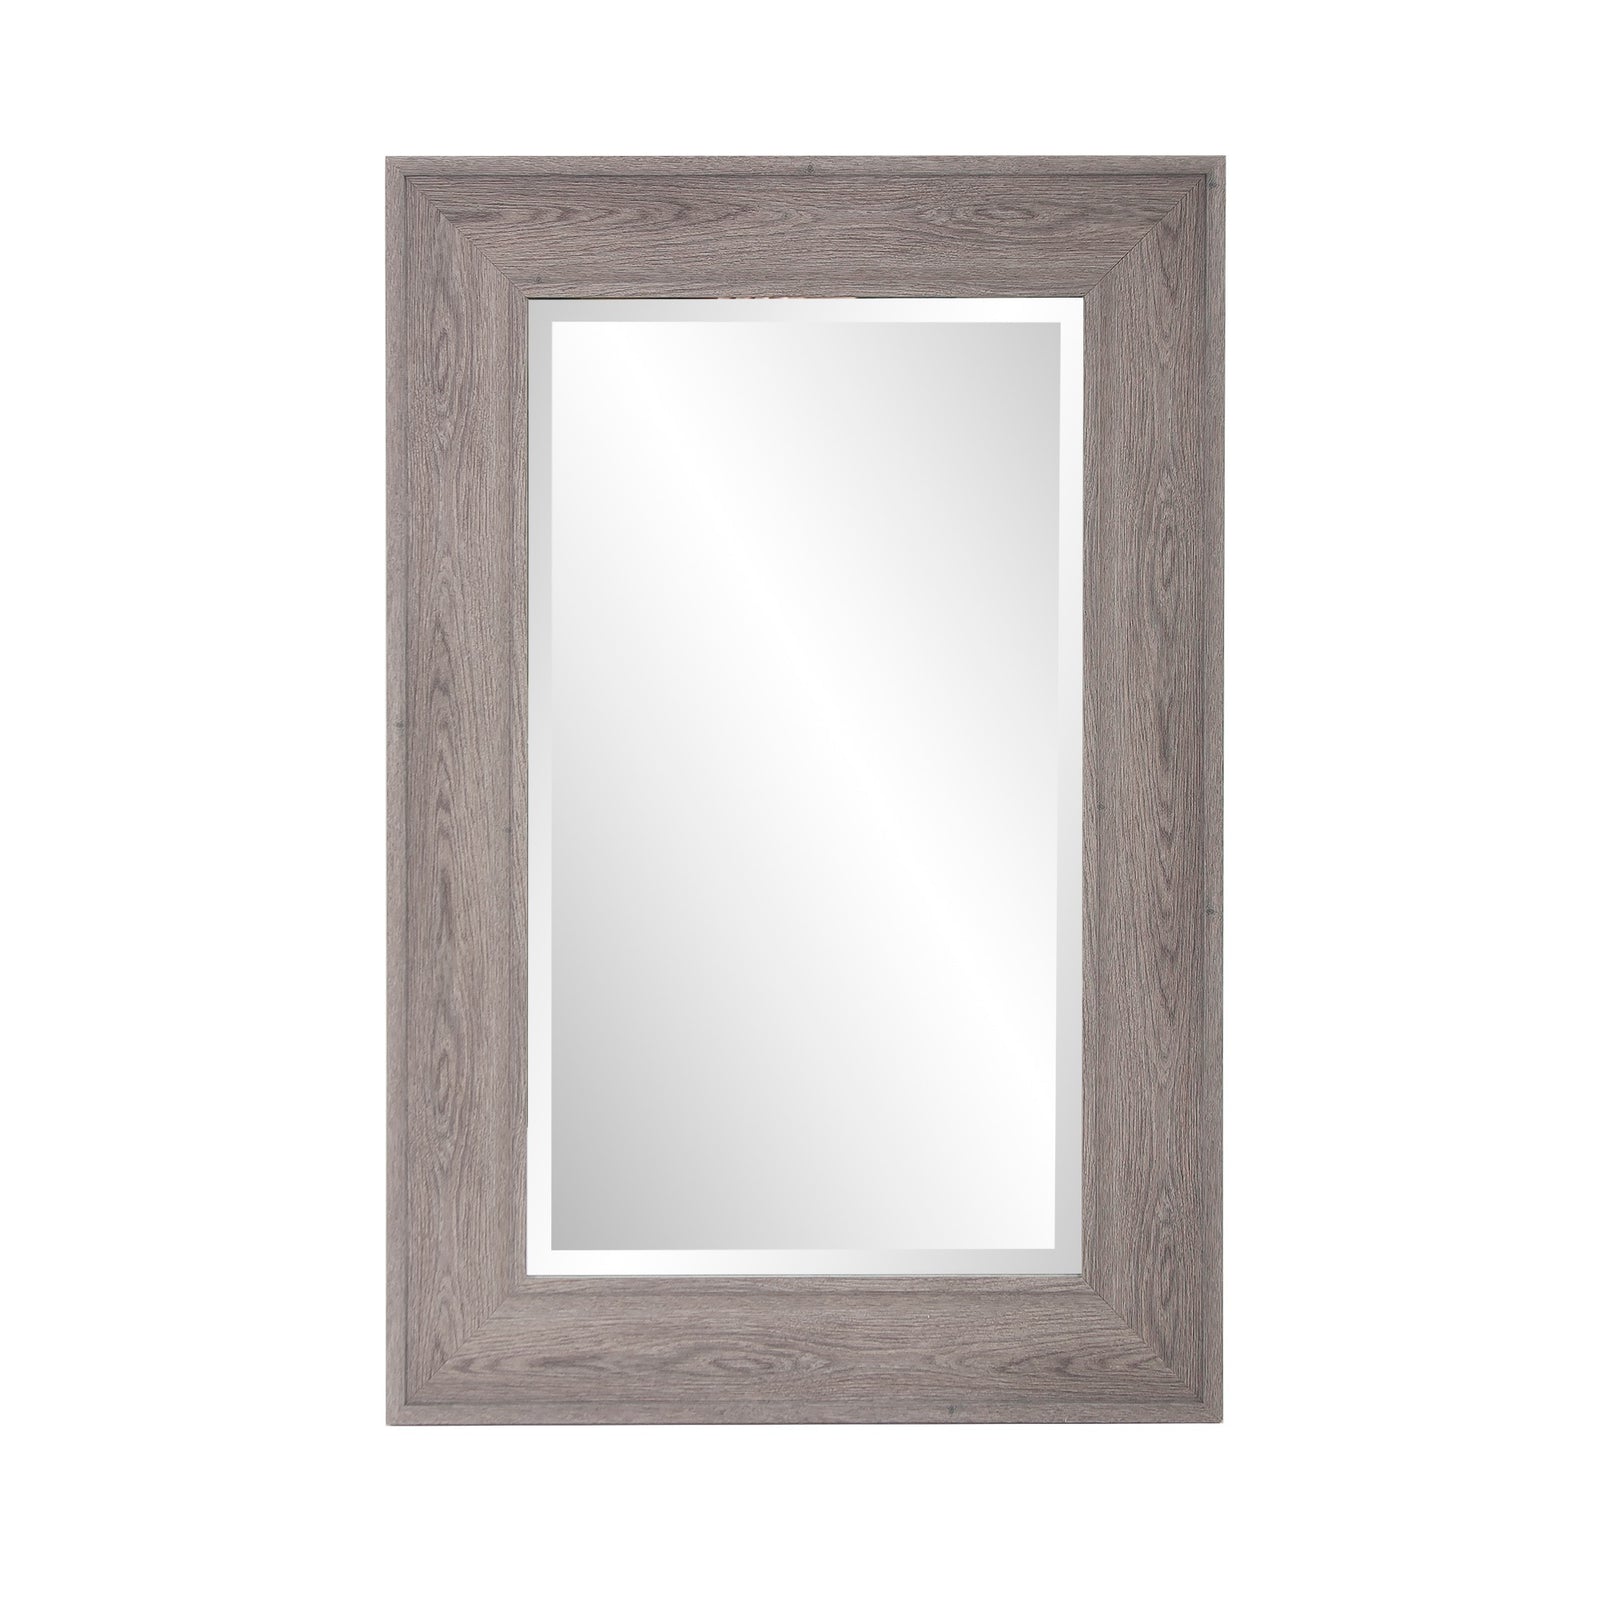 Warm Gray Faux Wood Beveled Rectangular Mirror